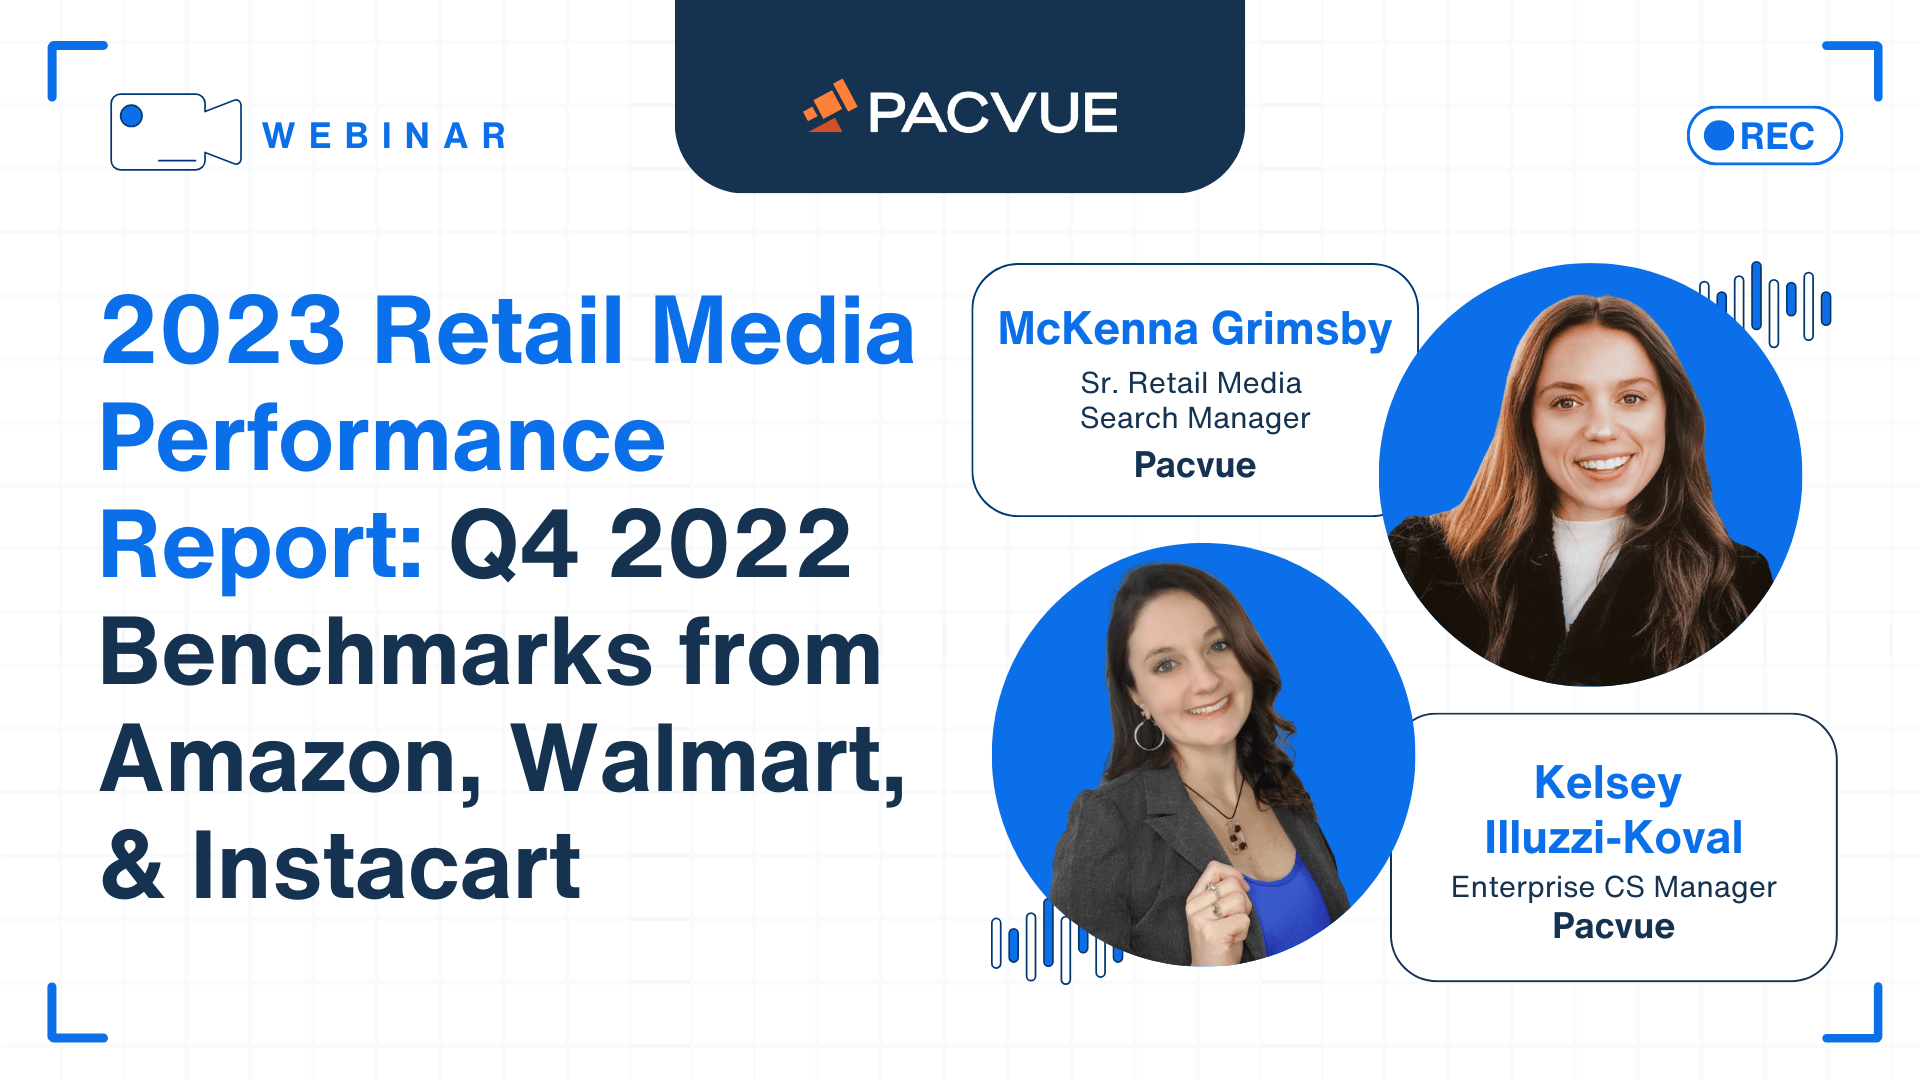 Retail Media Performance Report 2023: Q4 2022 Benchmarks von Amazon, Walmart, &amp; Instacart